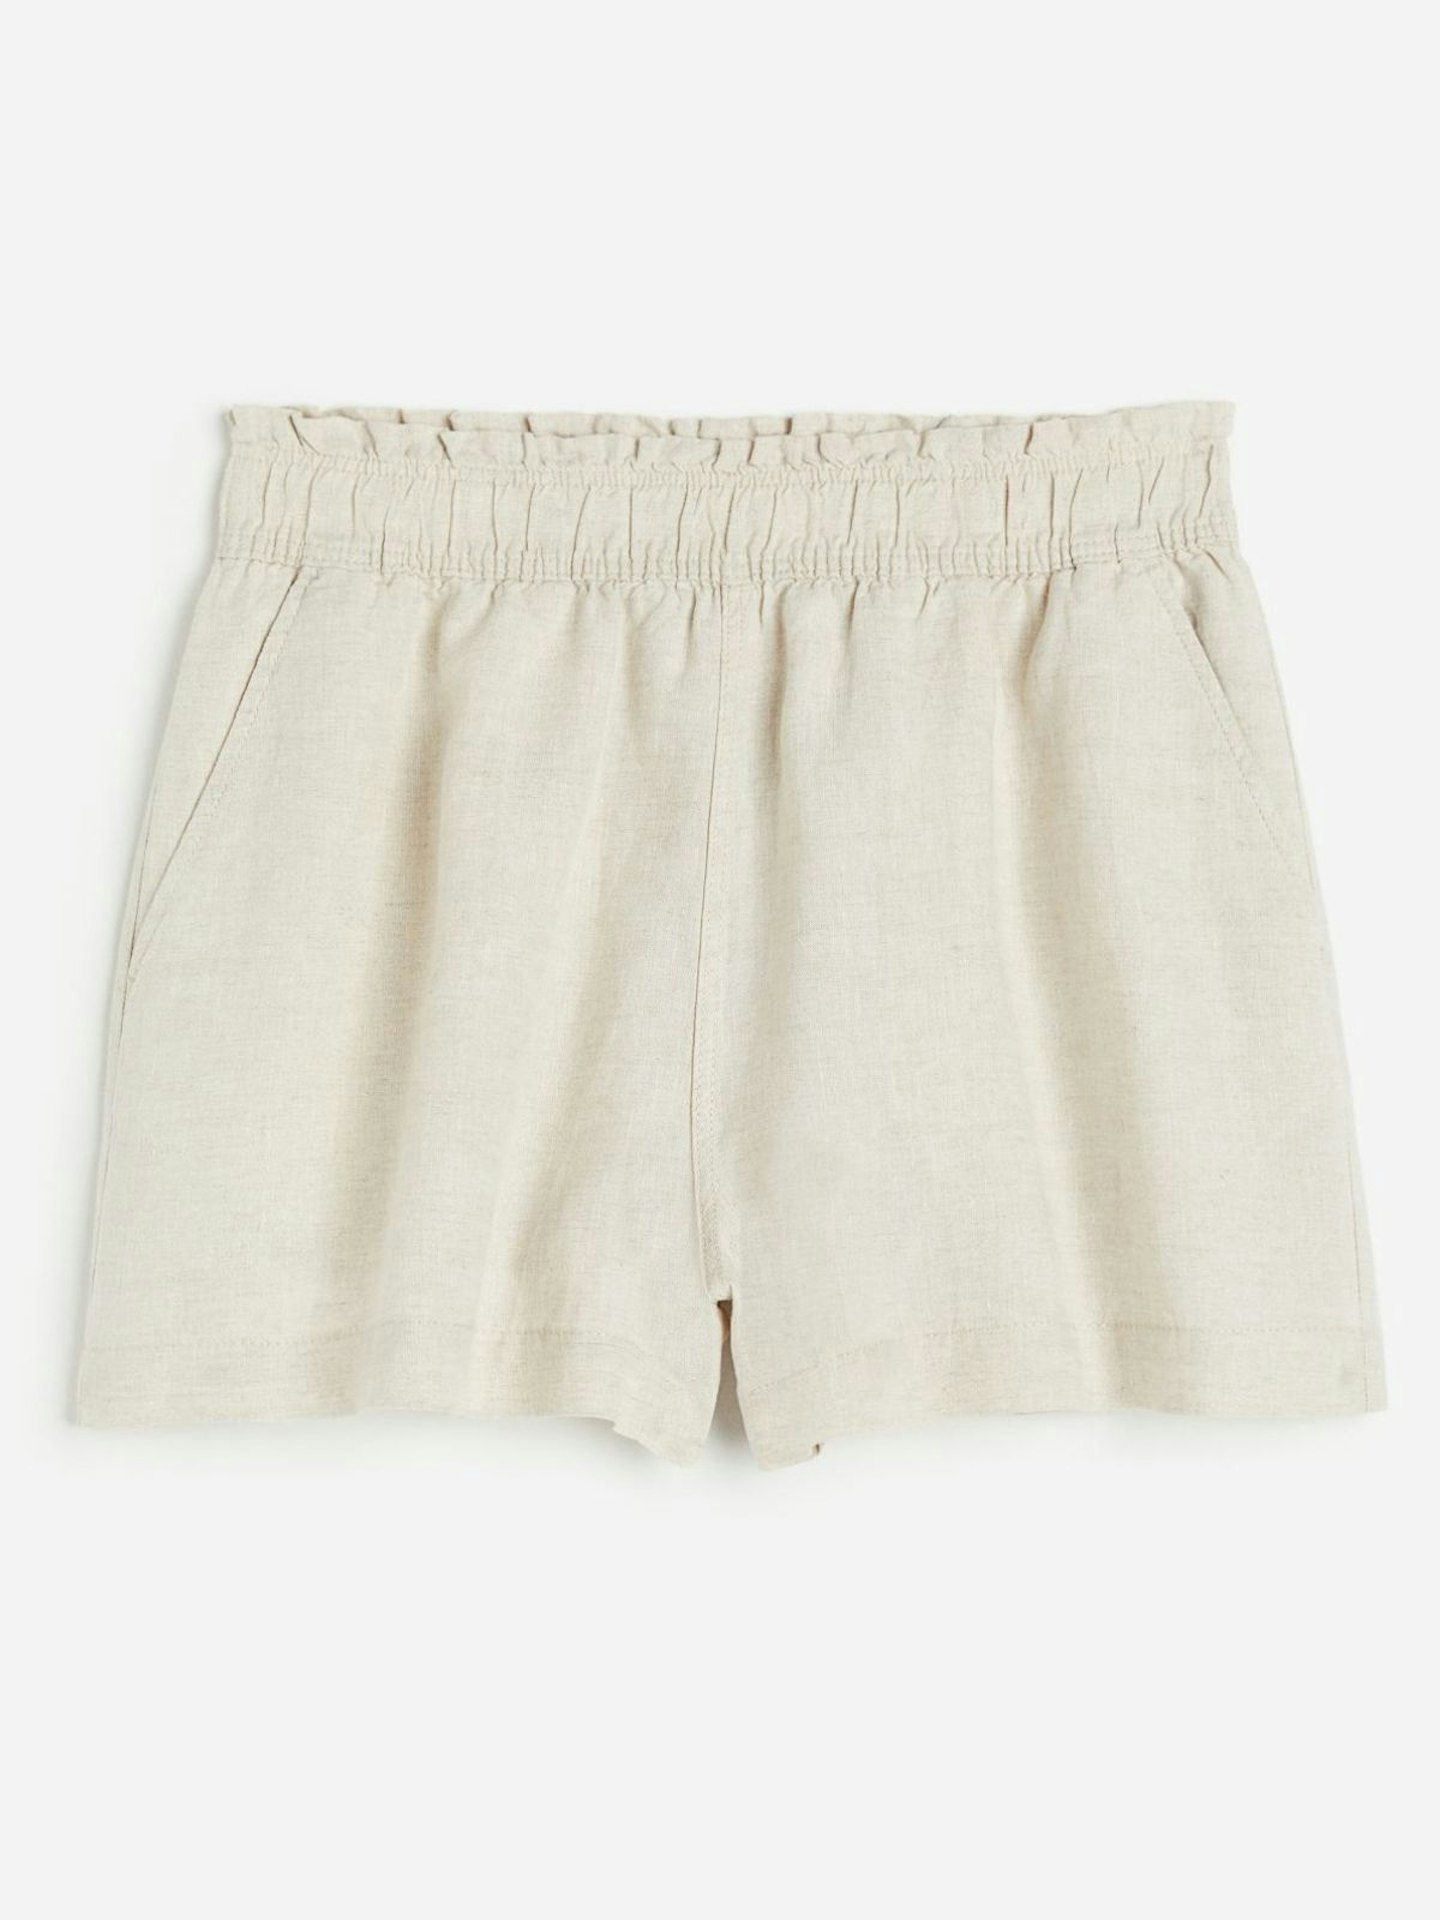 H&M Linen Shorts